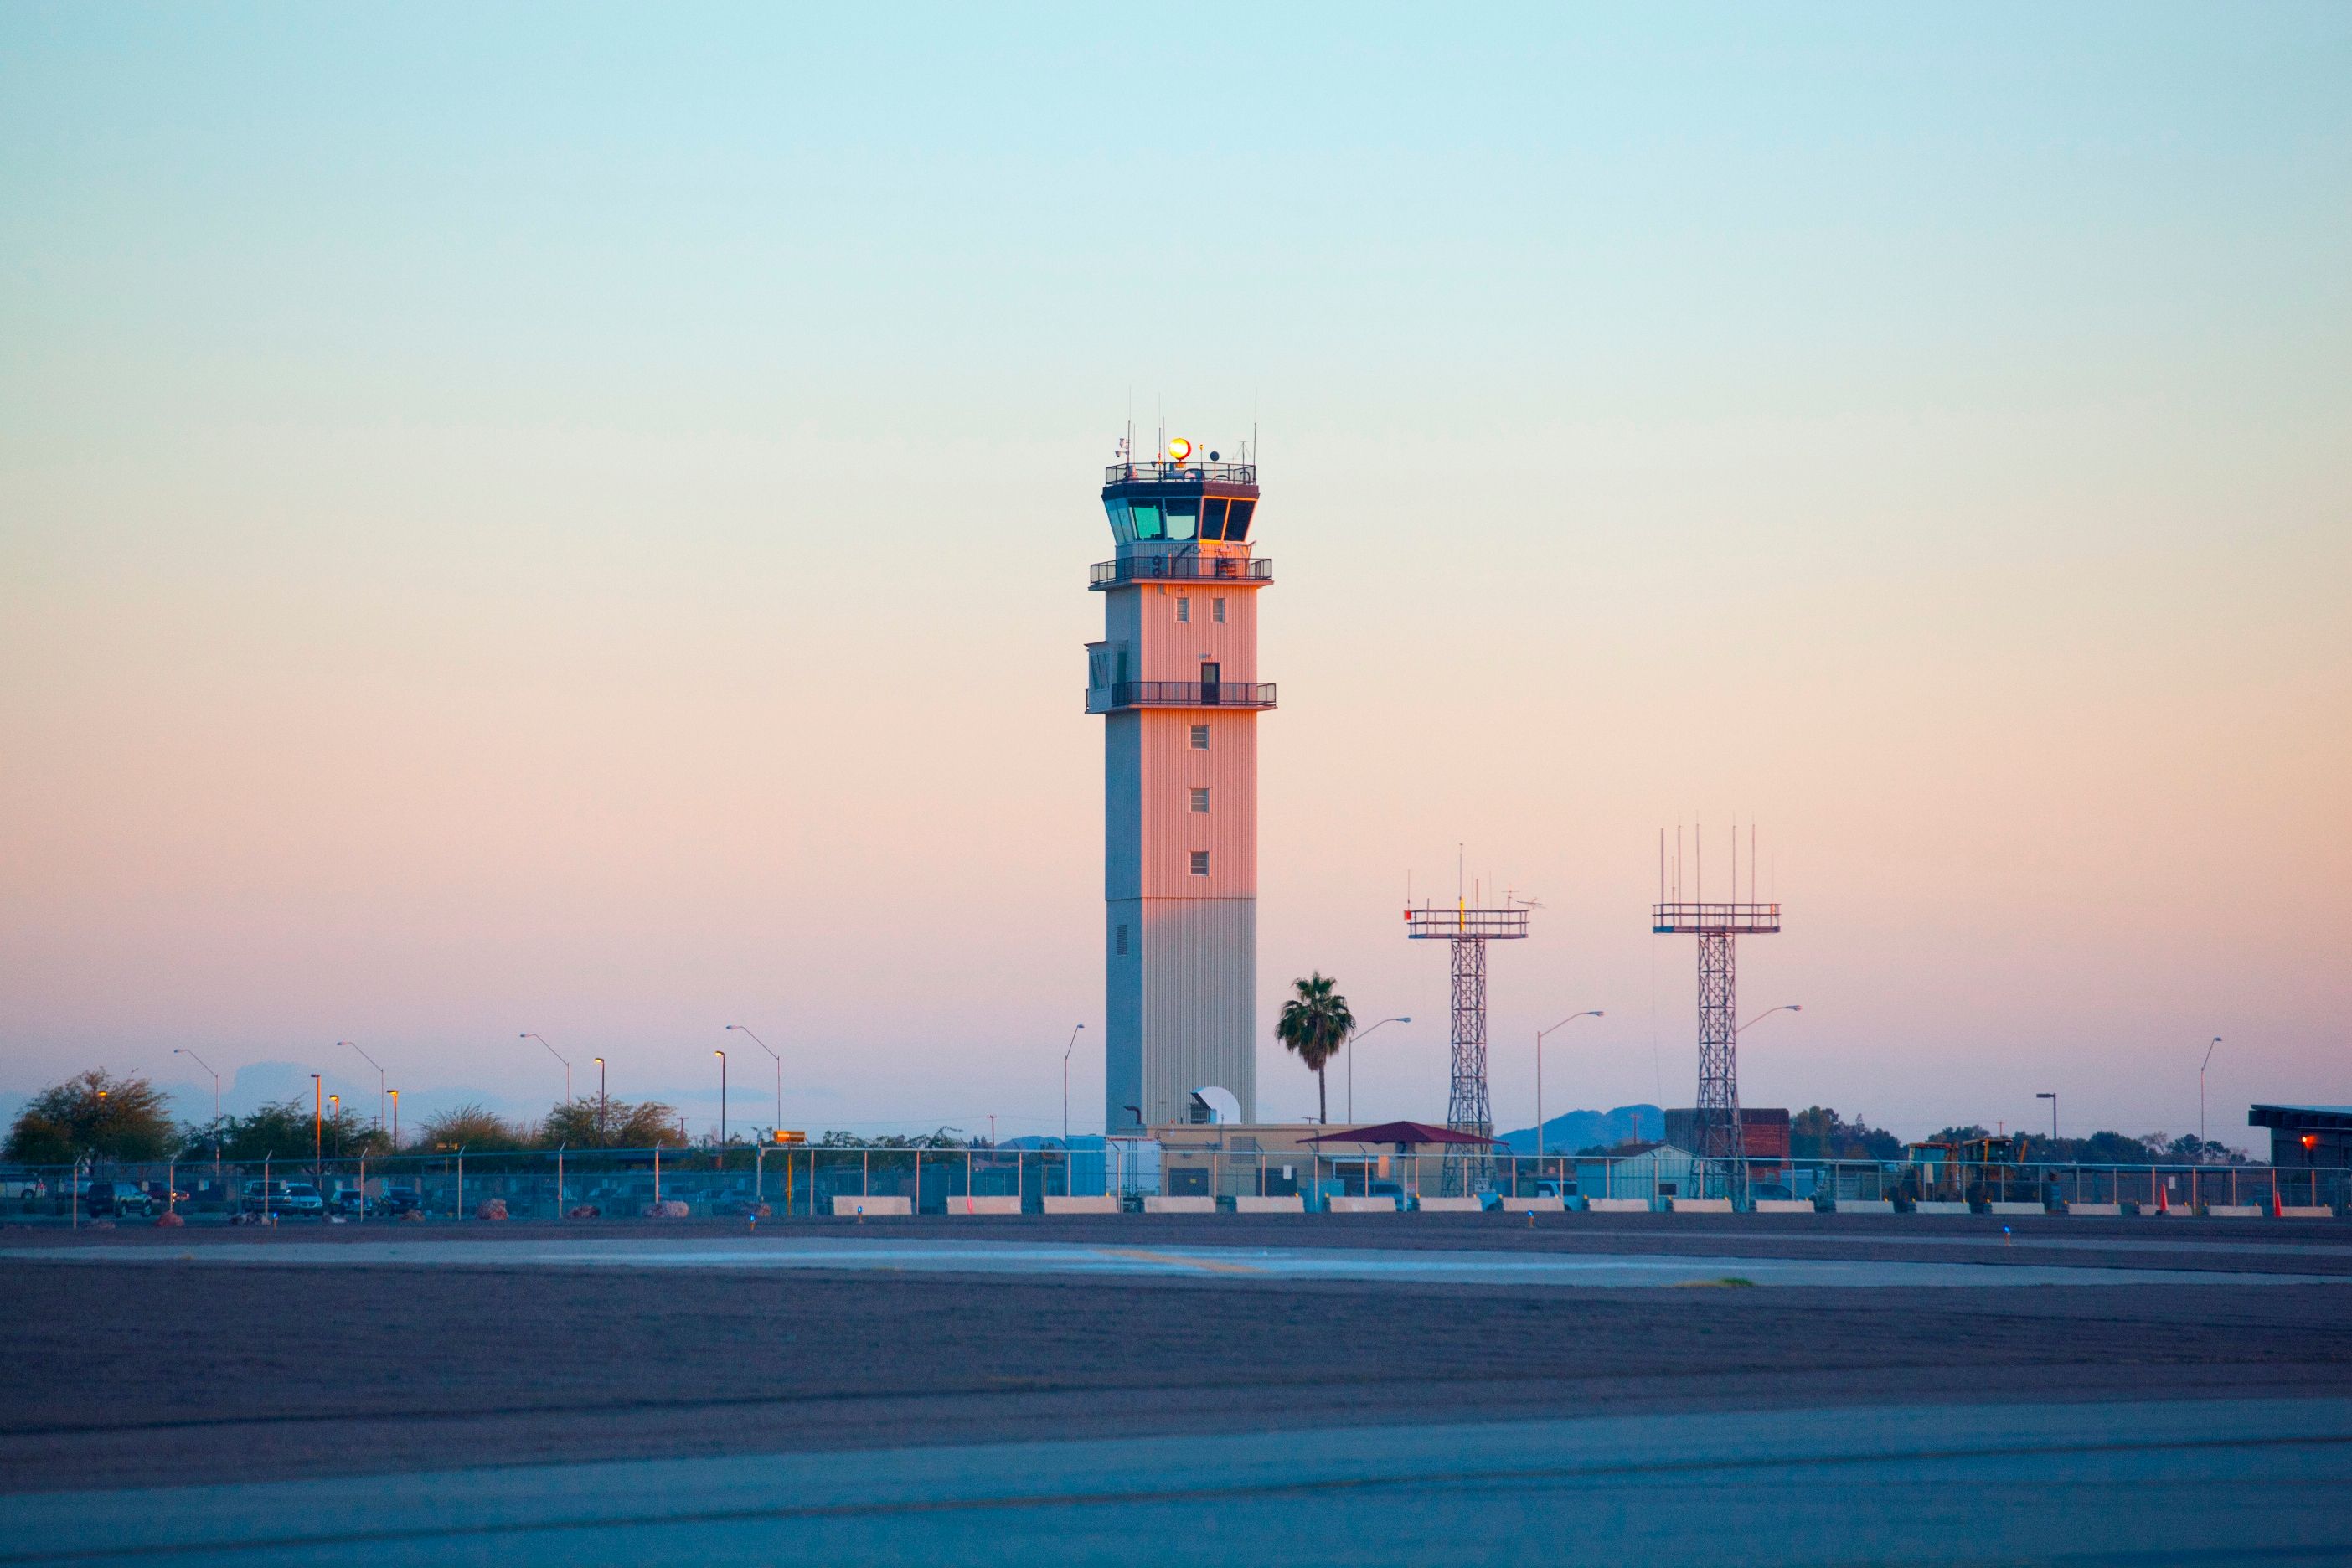 Phoenix Mesa Gateway Airport